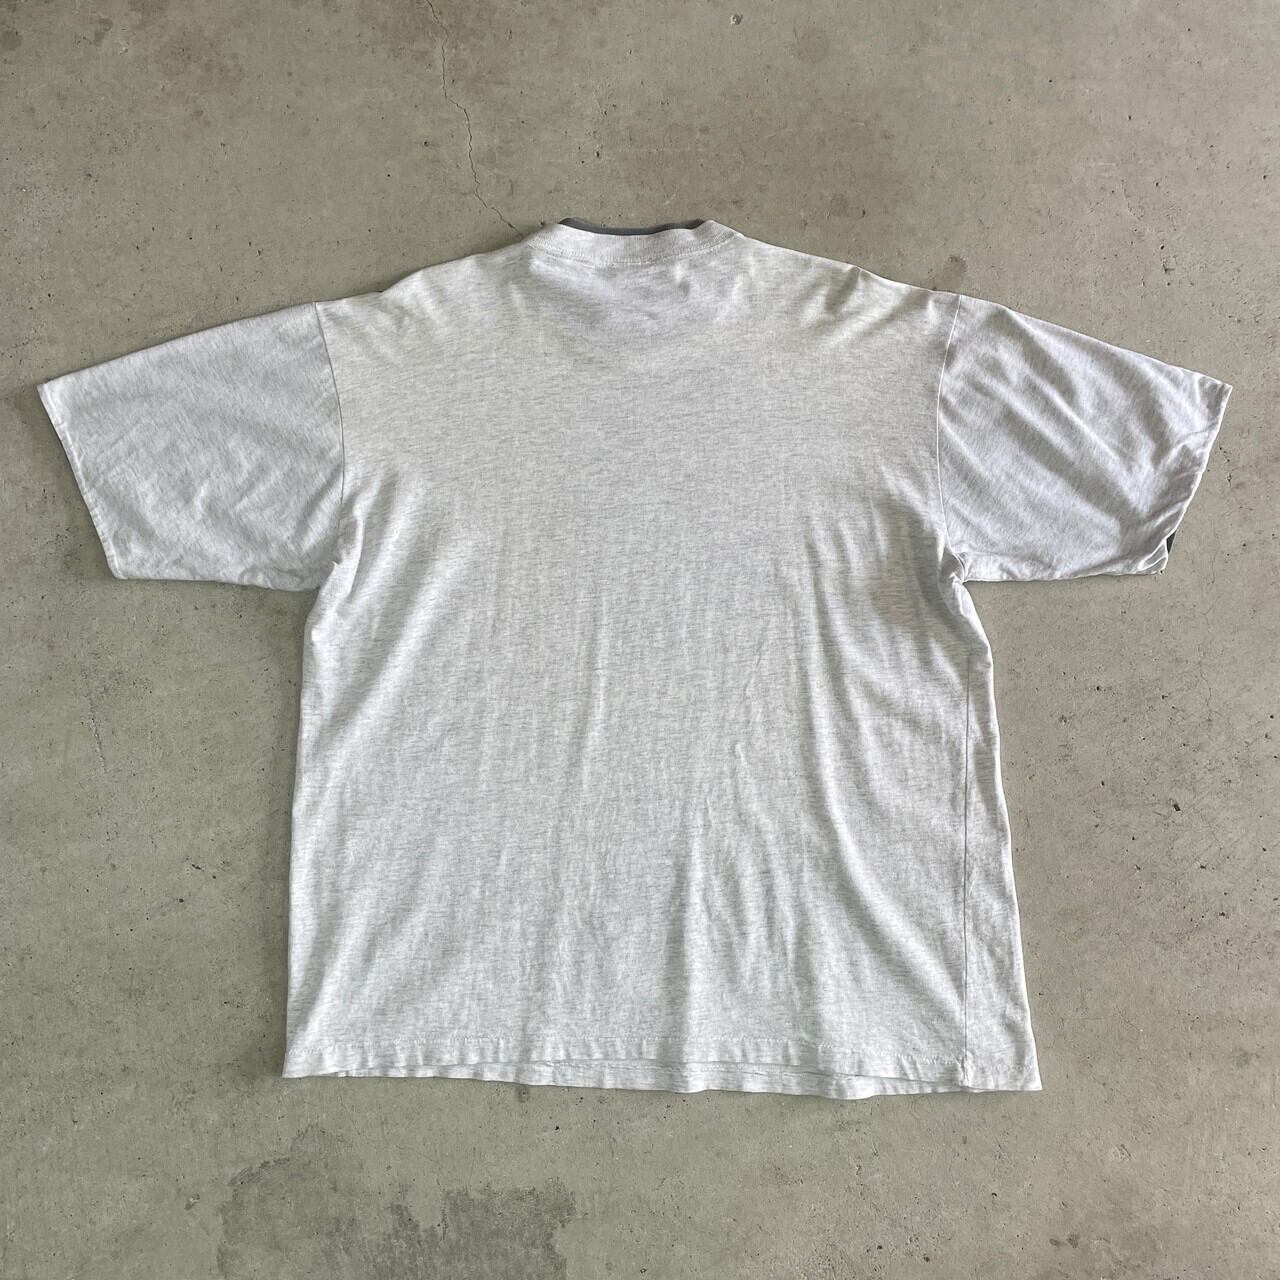 70s〜80s USA製 リンガー tシャツ 霜降り 胸プリ